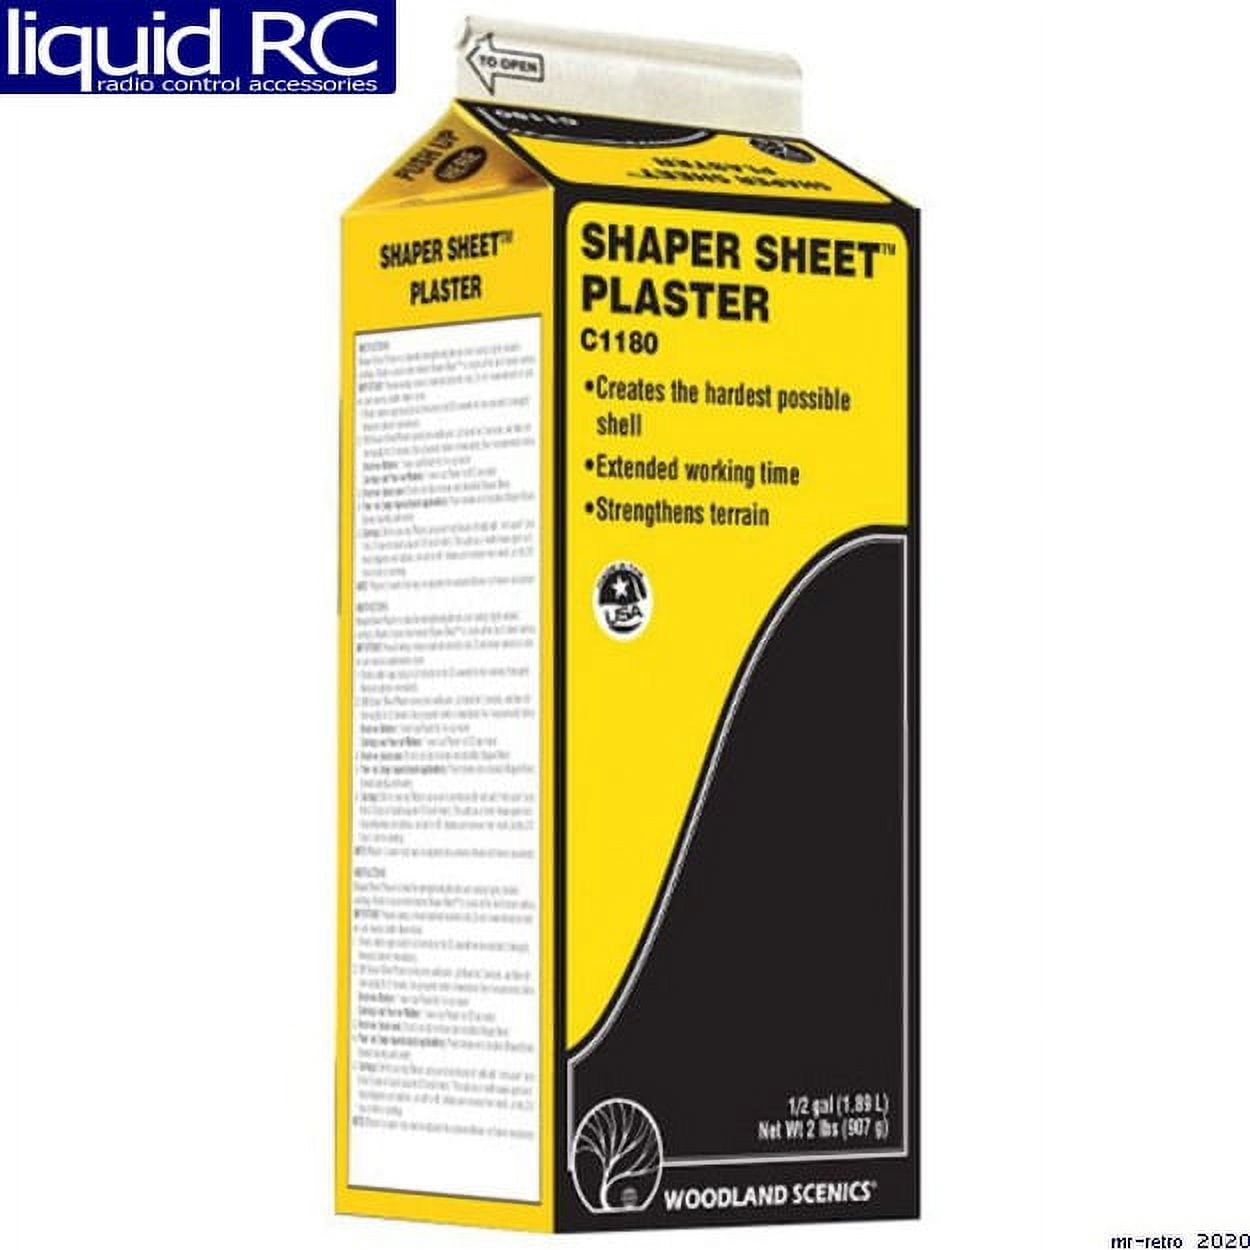 Shaper Sheet®* Plaster - Woodland Scenics